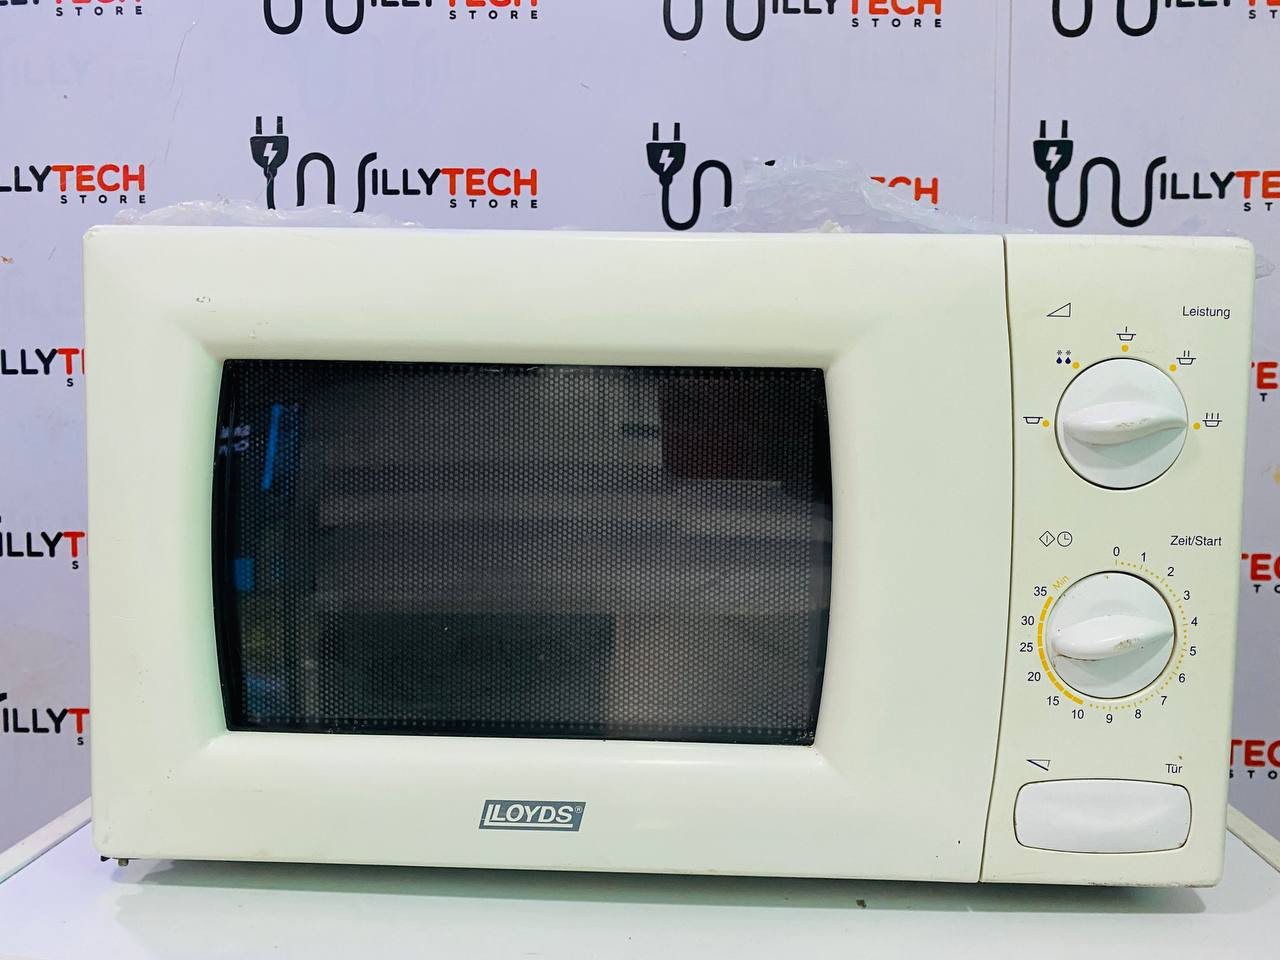 Loyds single Microwave